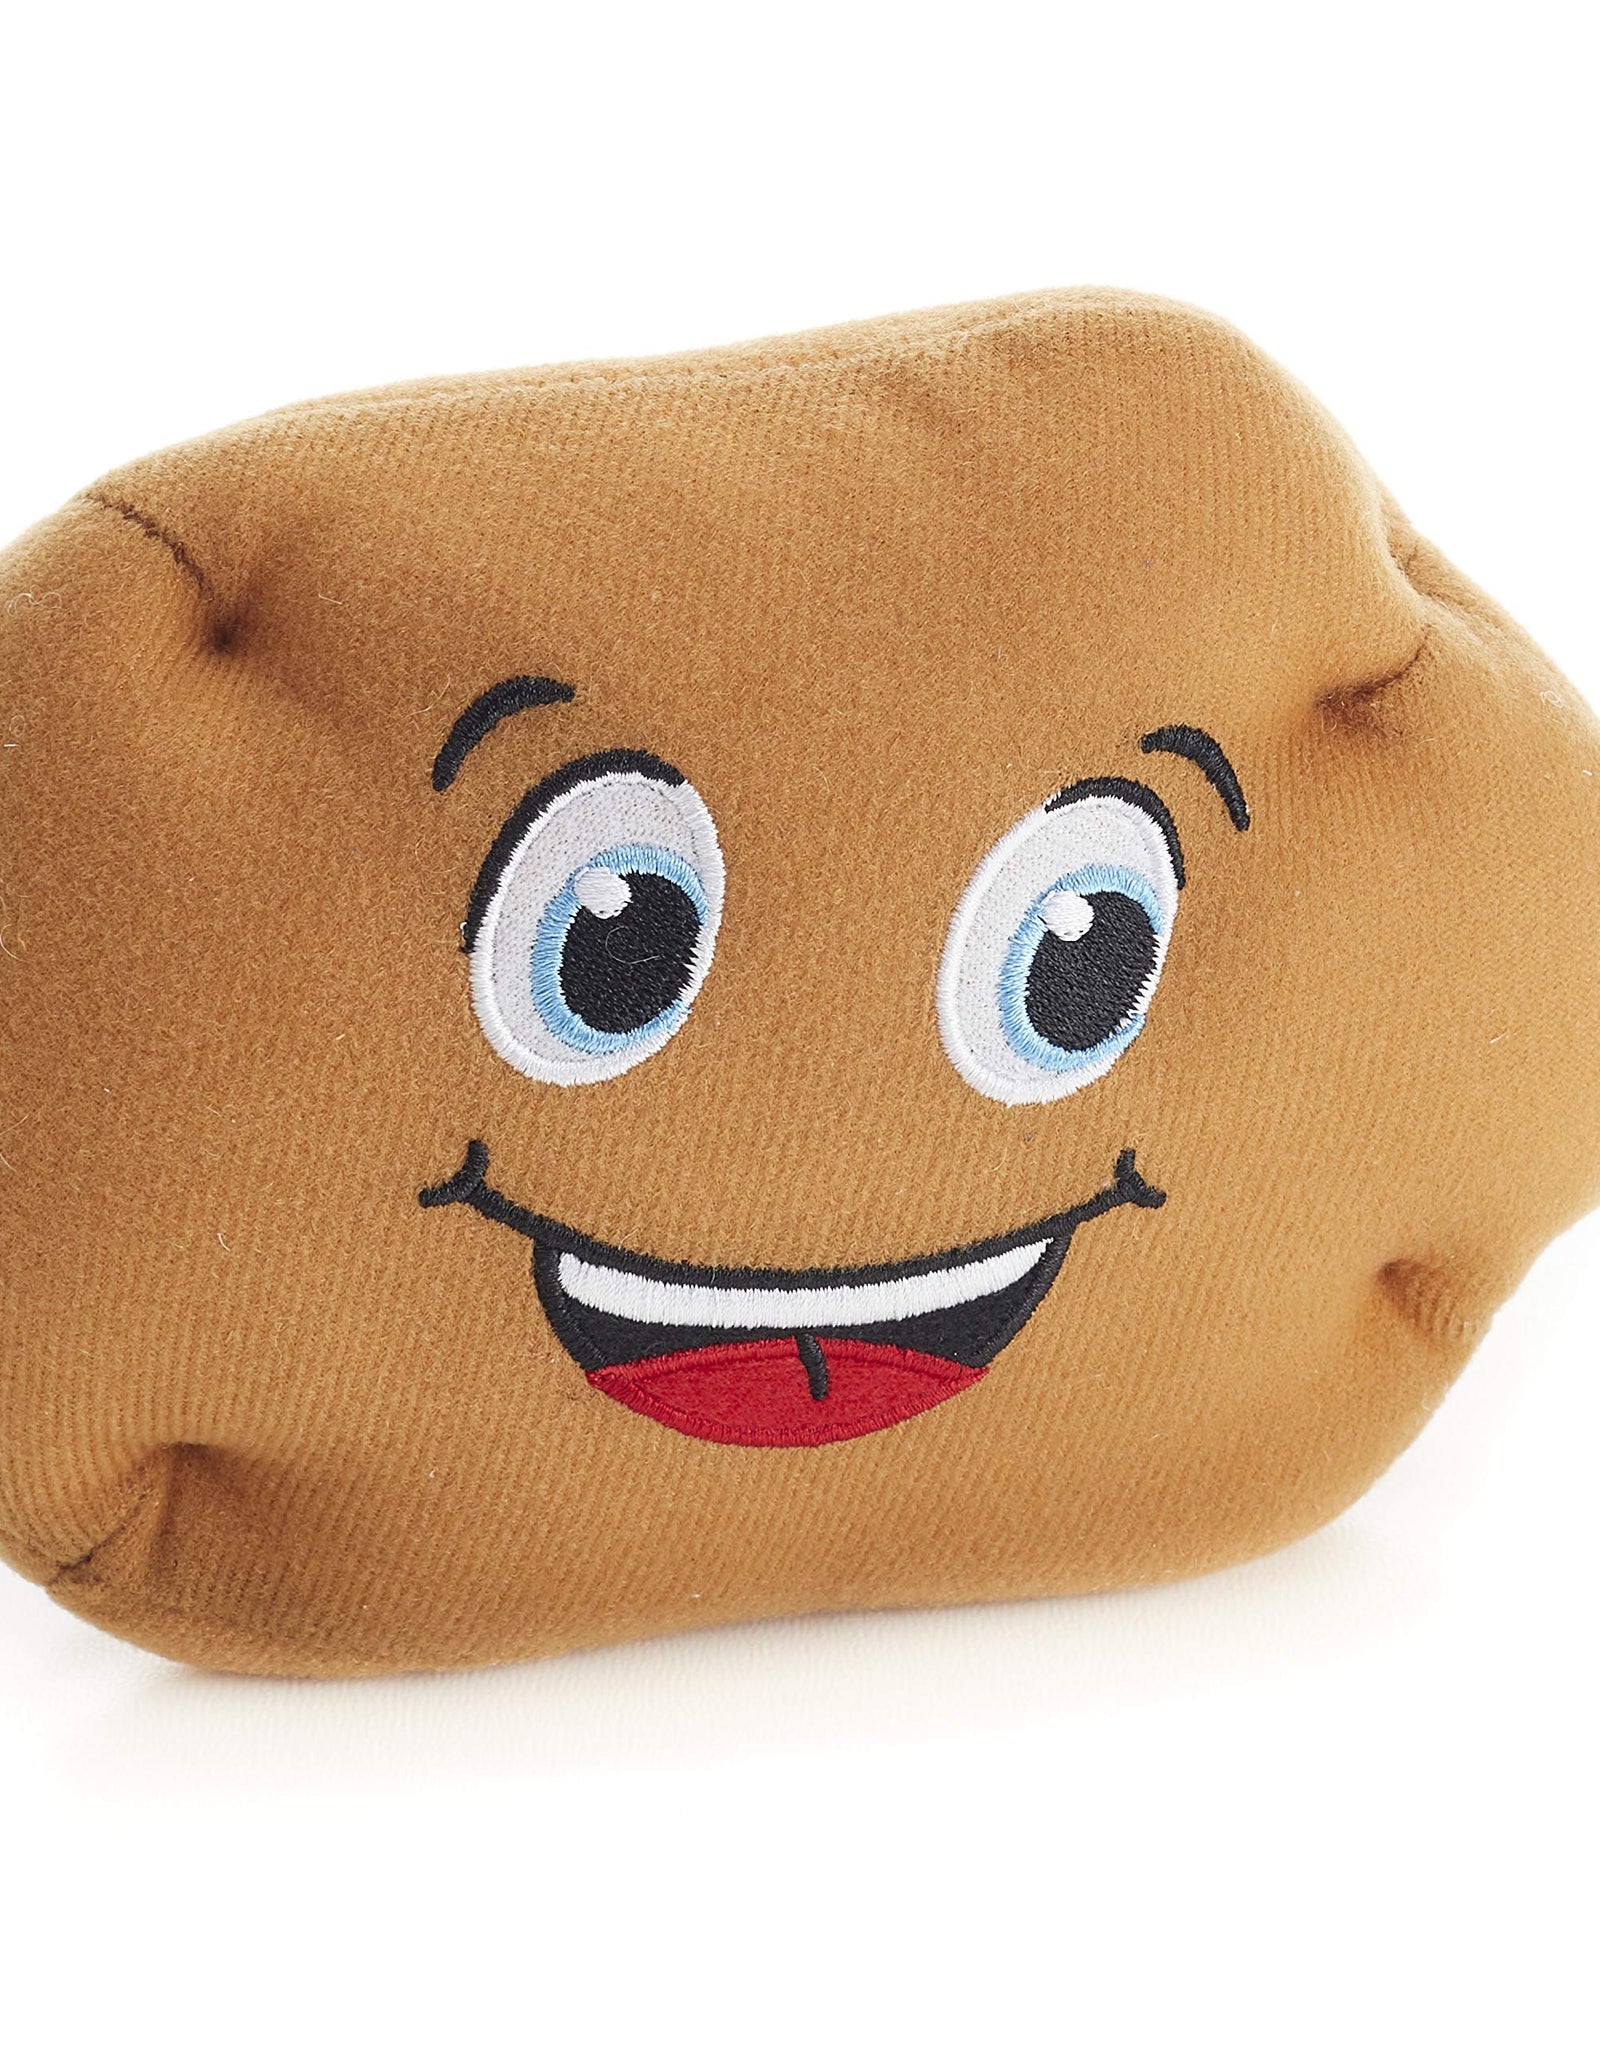 Tater Toss! Toss That Tater - Electronic Plush Potato Passing Game for Kids